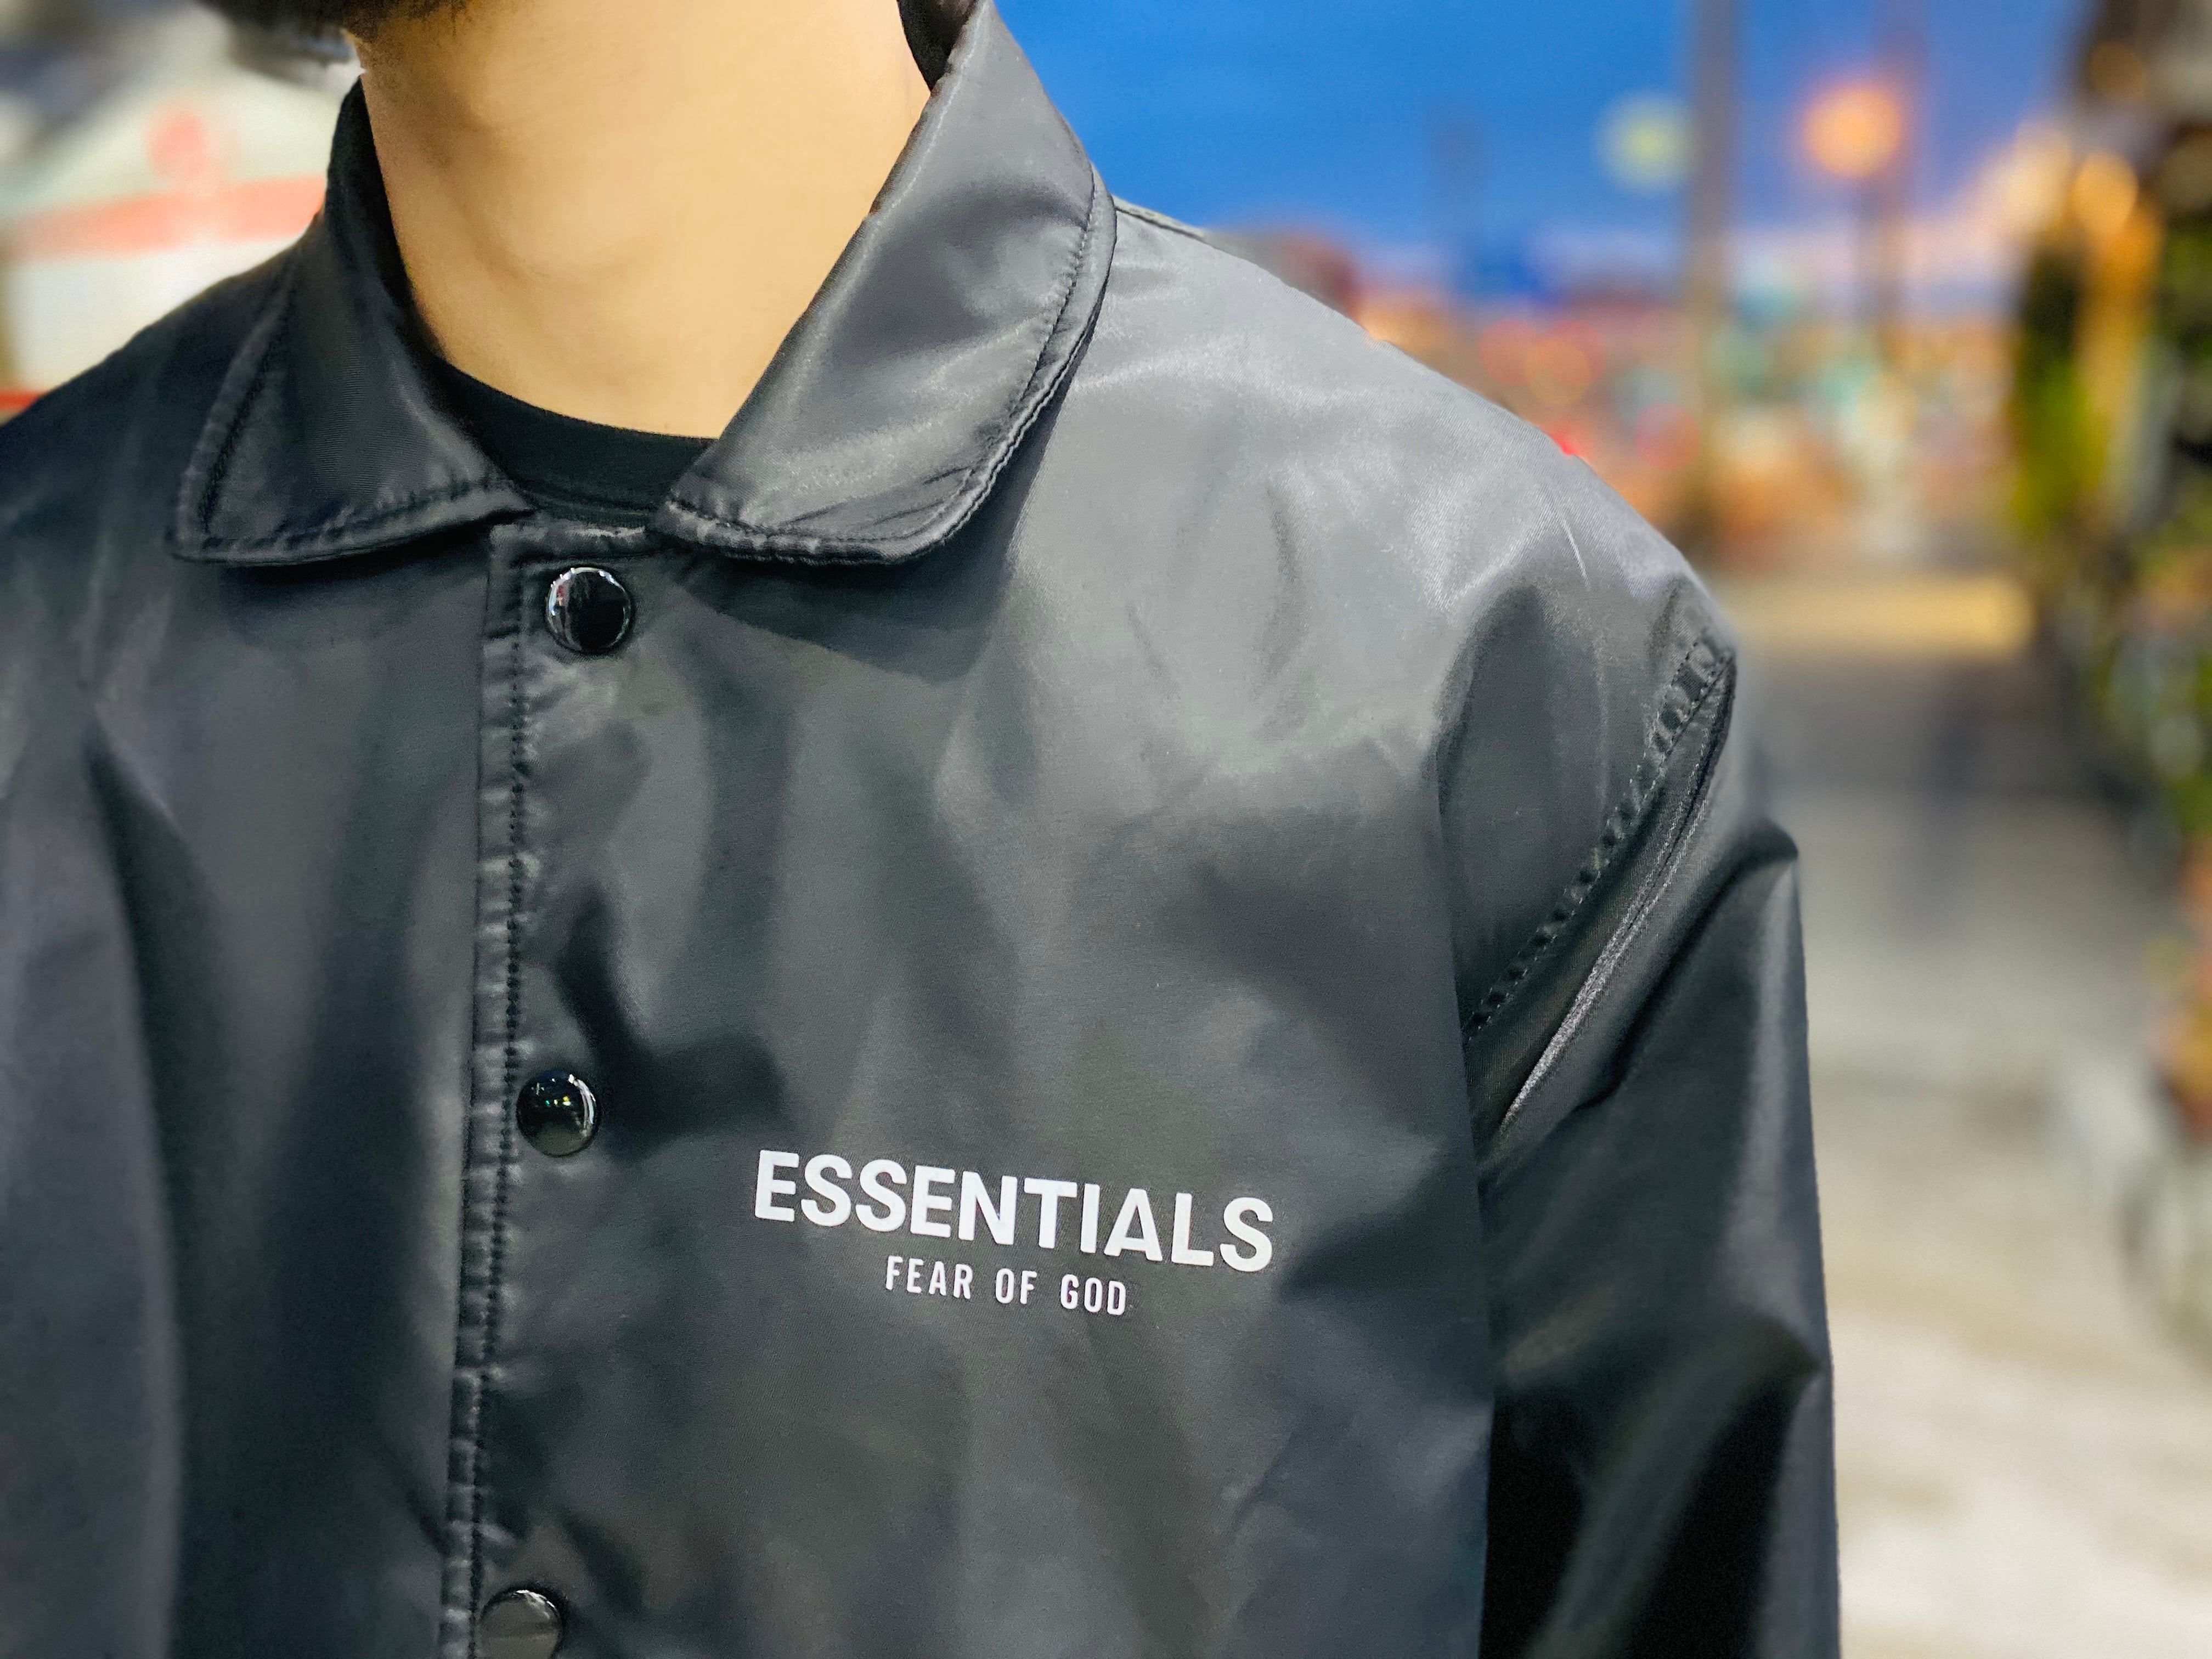 Fear of God Essentials Coach jacket